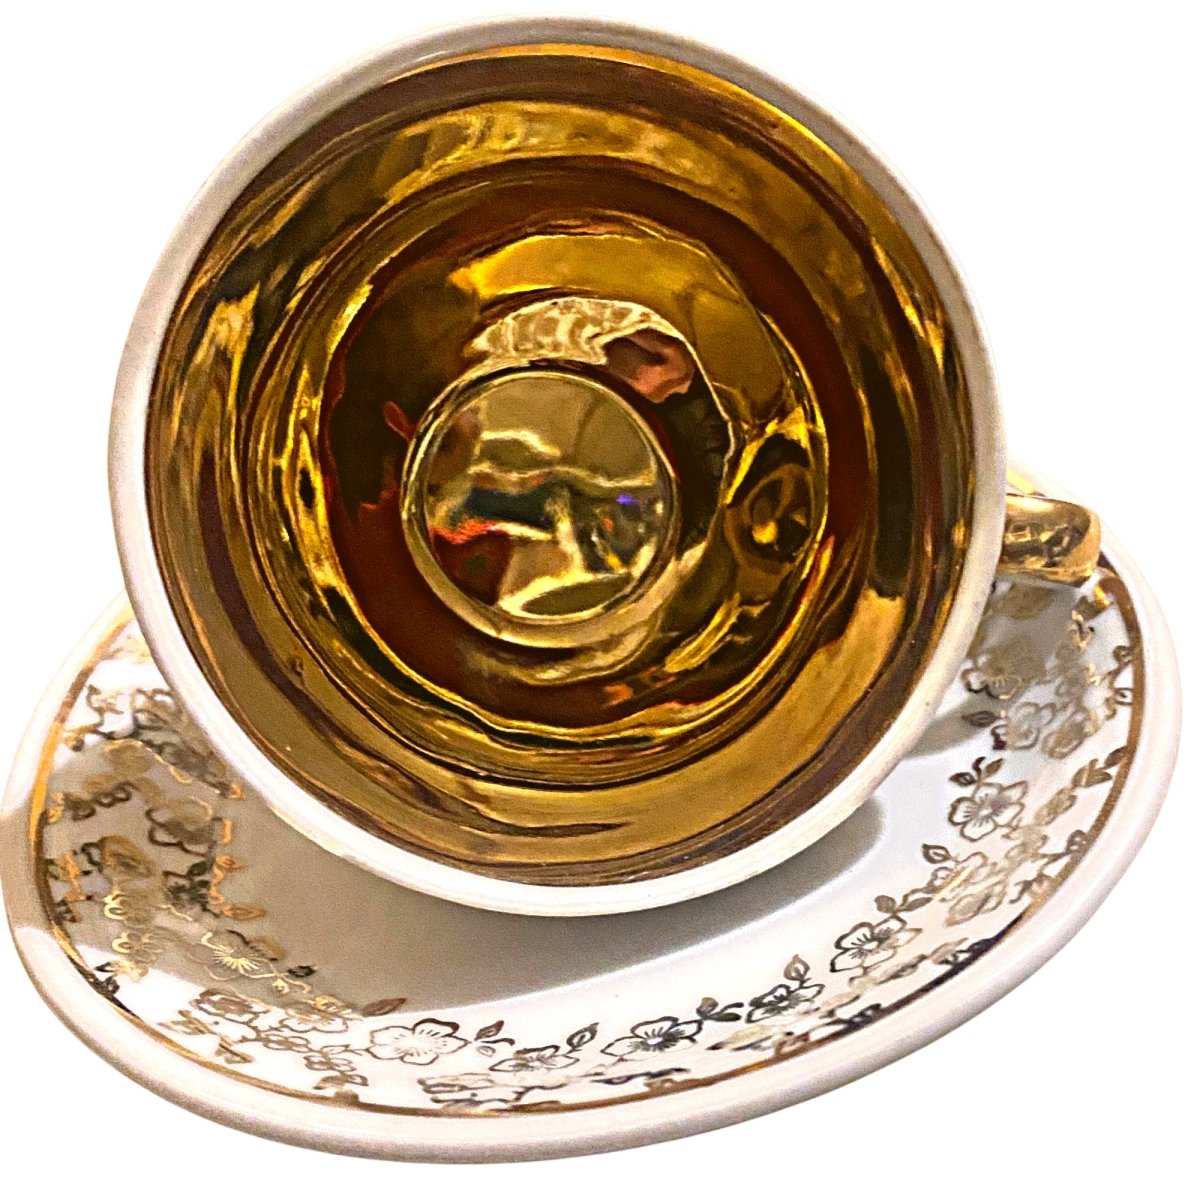 Eisenberg | Cream & Gold Mocha Miniature Cup w. gold Interior, c.1955